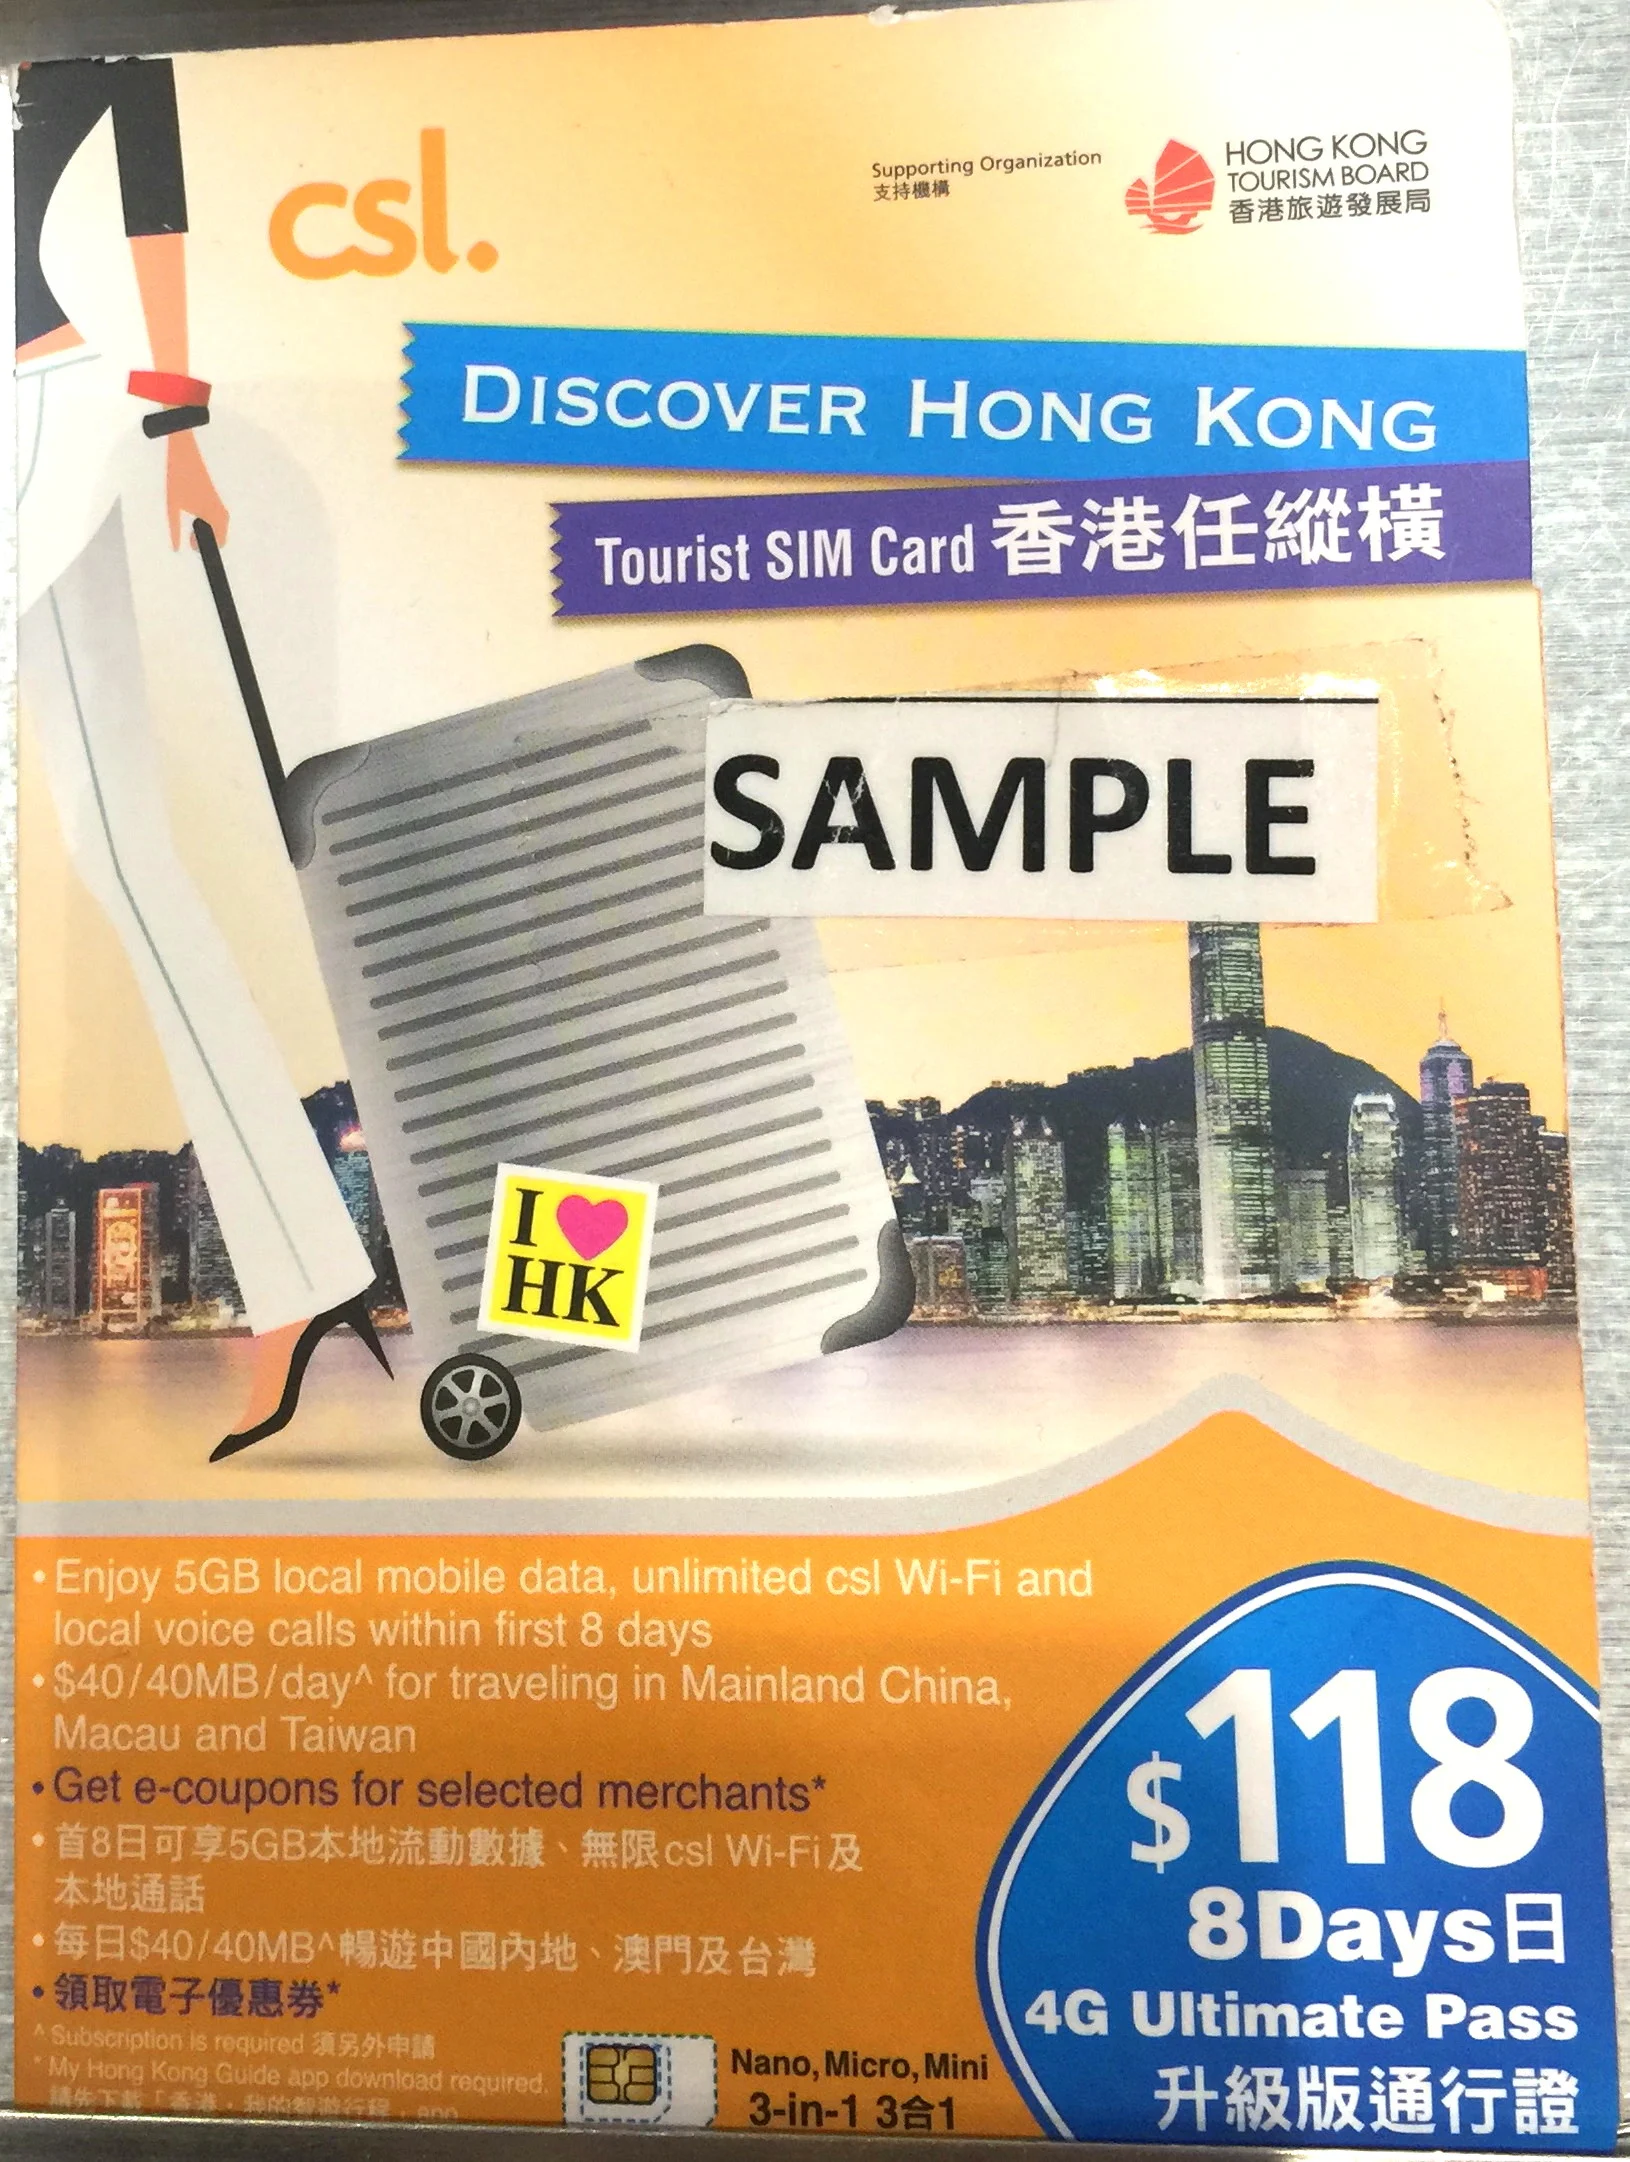 Hong Kong Tourist Sim Card for 8 days